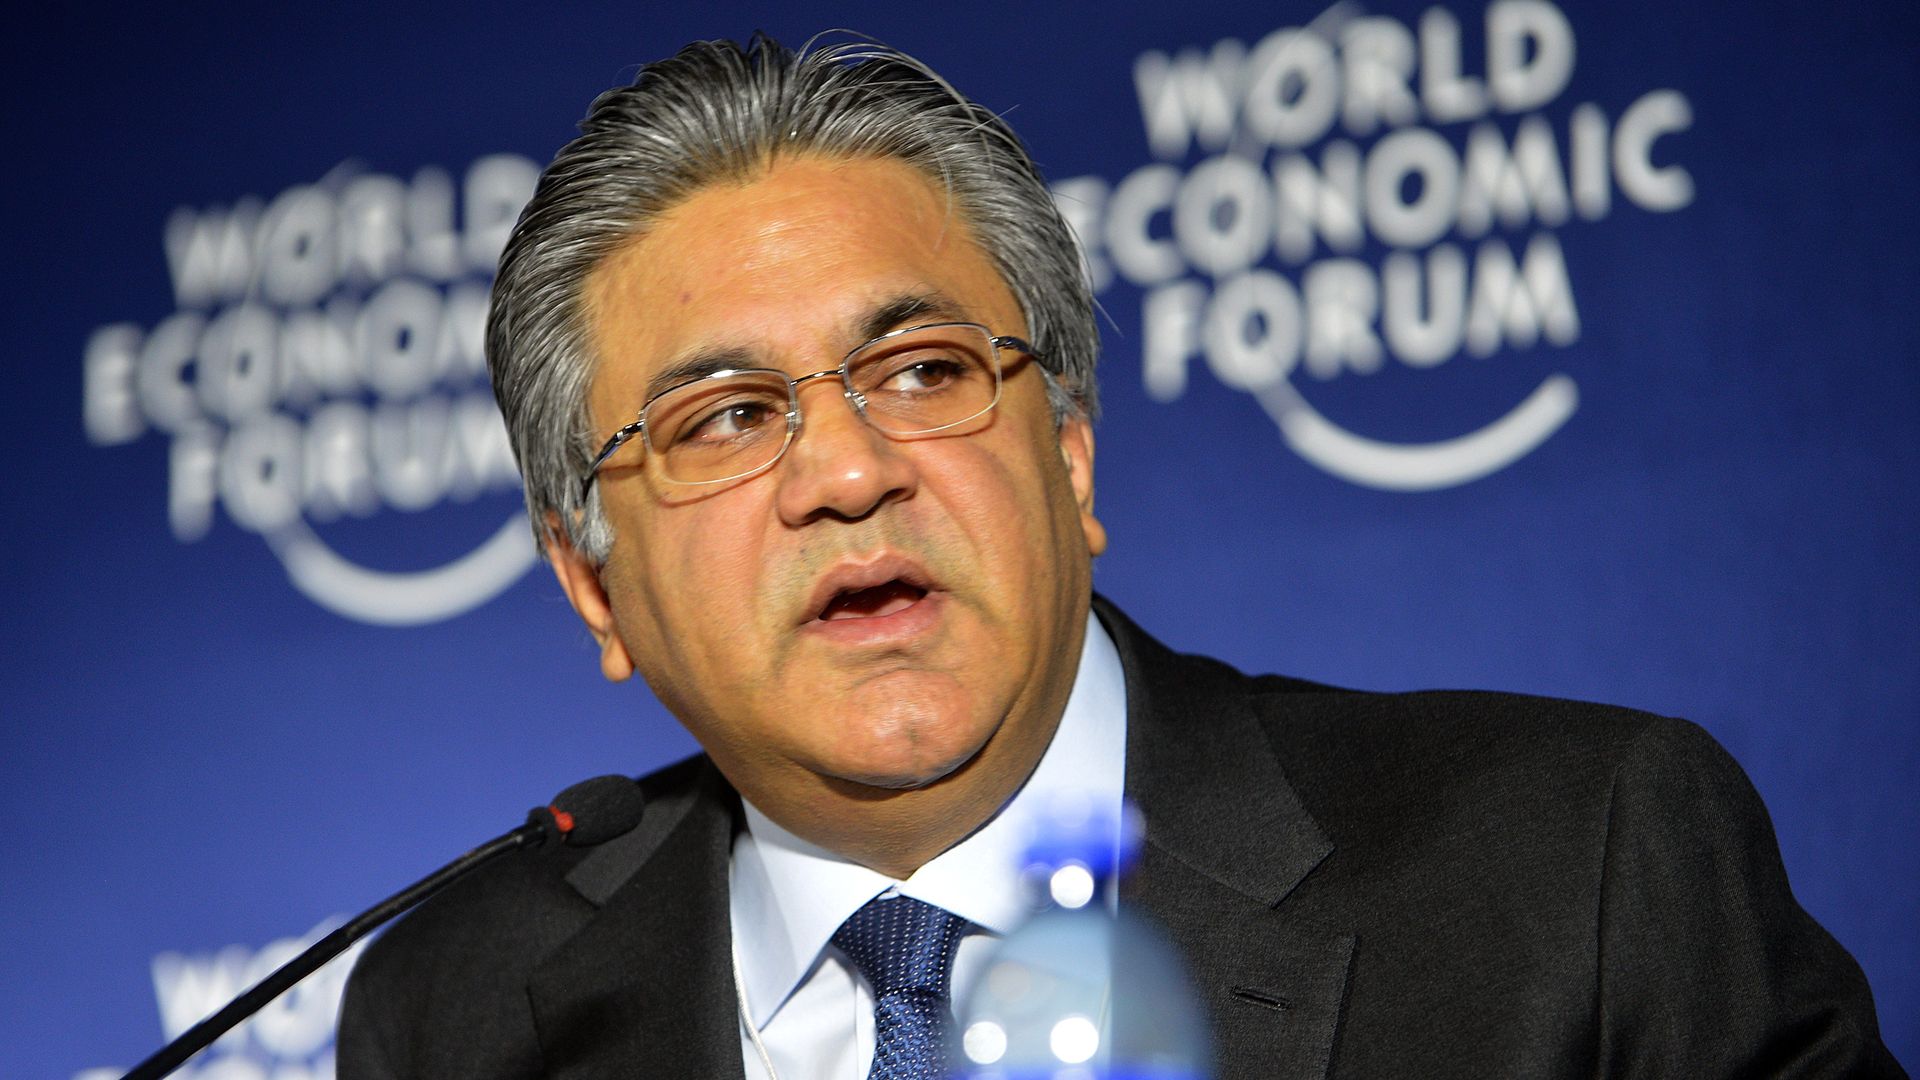 Abraaj Group founder Arif Naqvi speaking at a World Economic Forum event.